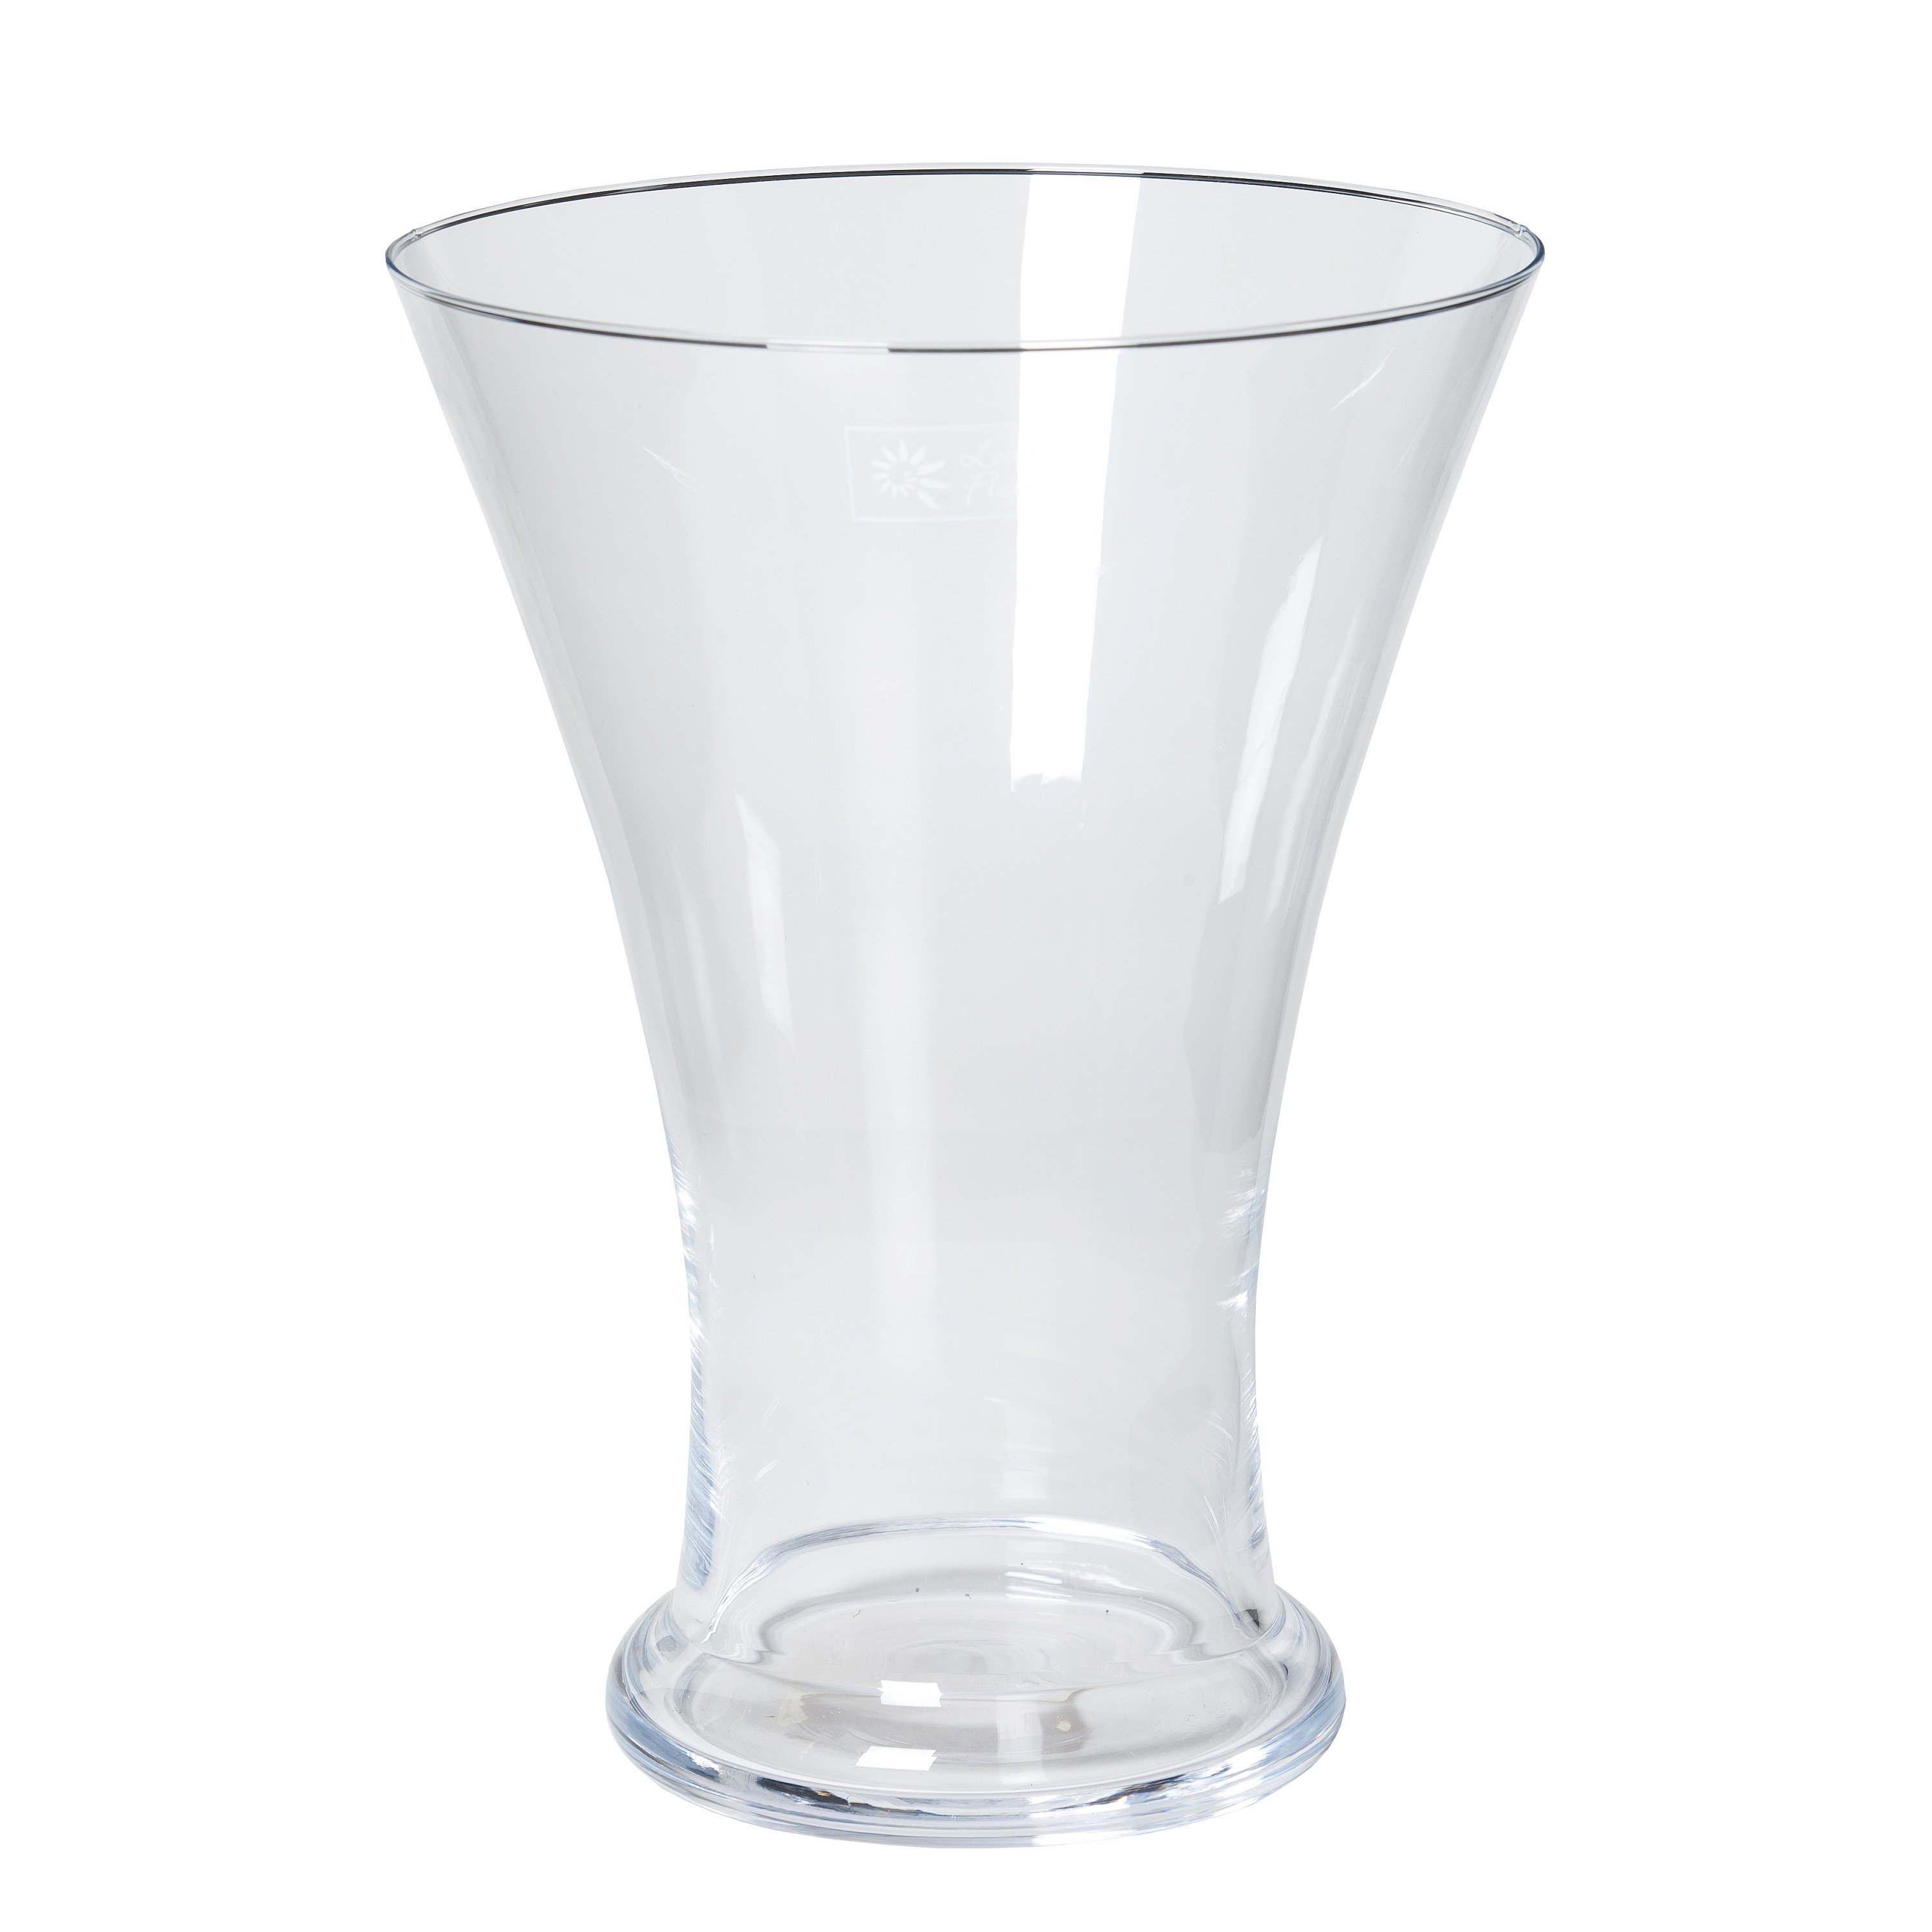 Merkloos Bellatio Design Vaas - taps uitlopend - transparant - glas - 30 cm -